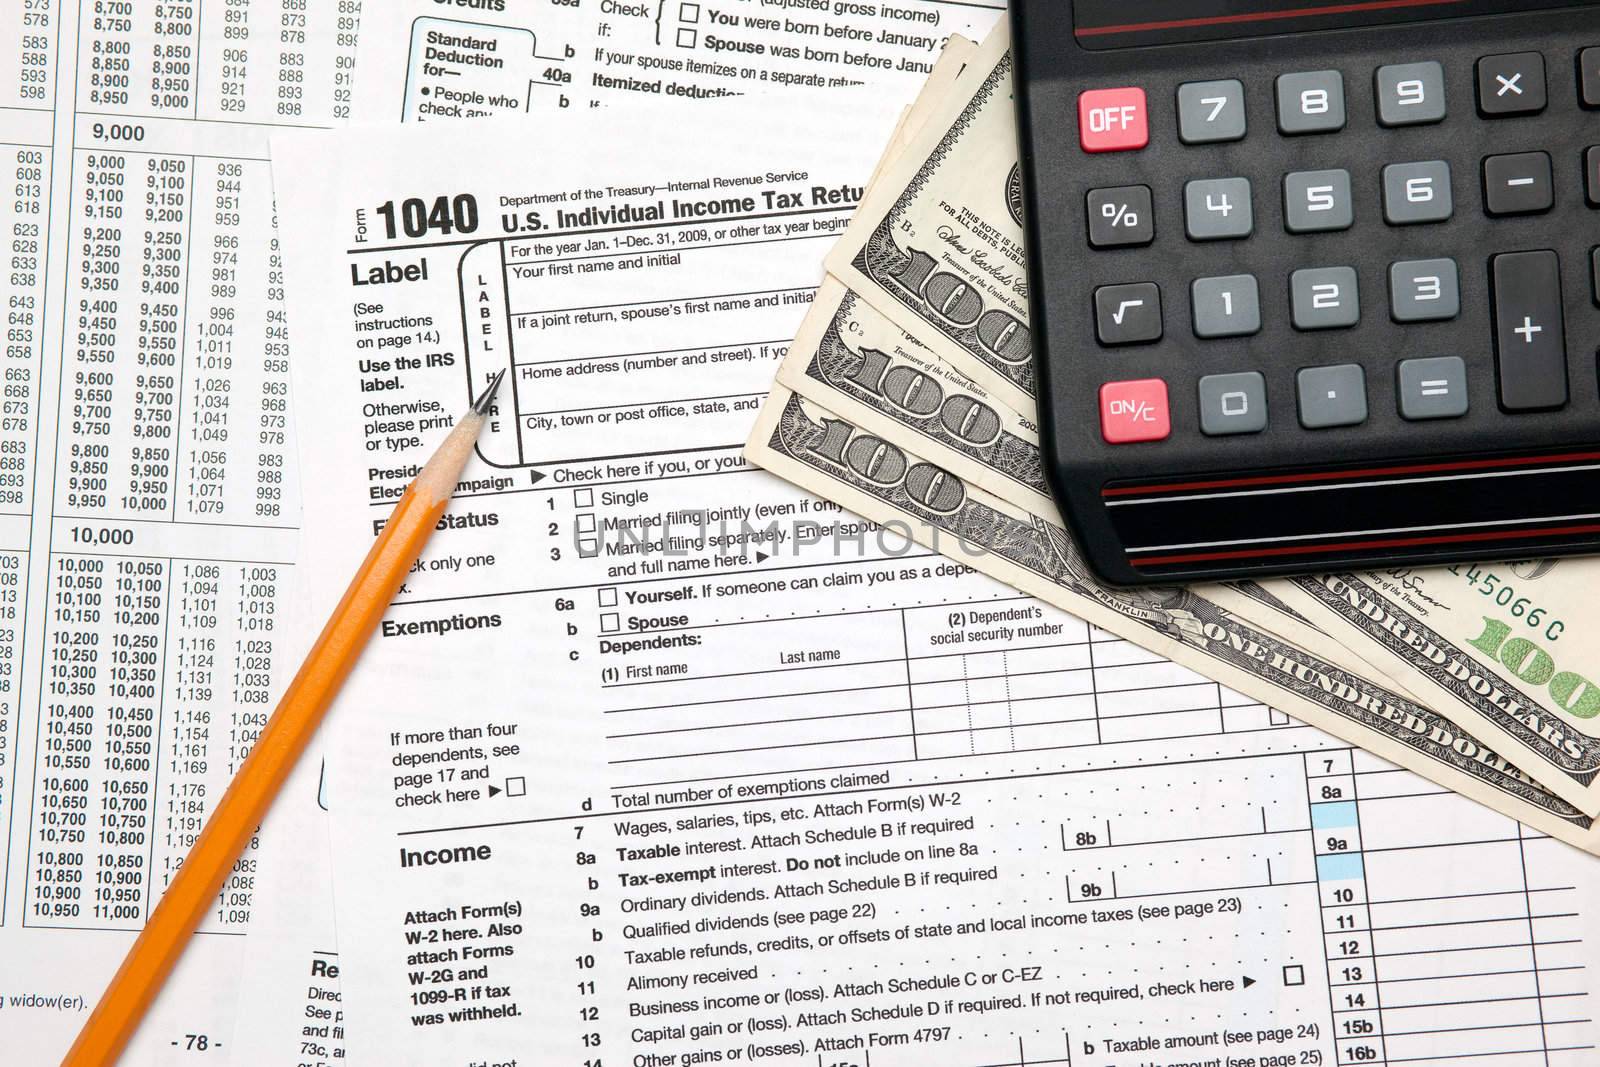 Tax time - Closeup of U.S. 1040 tax return with pencil and calculator